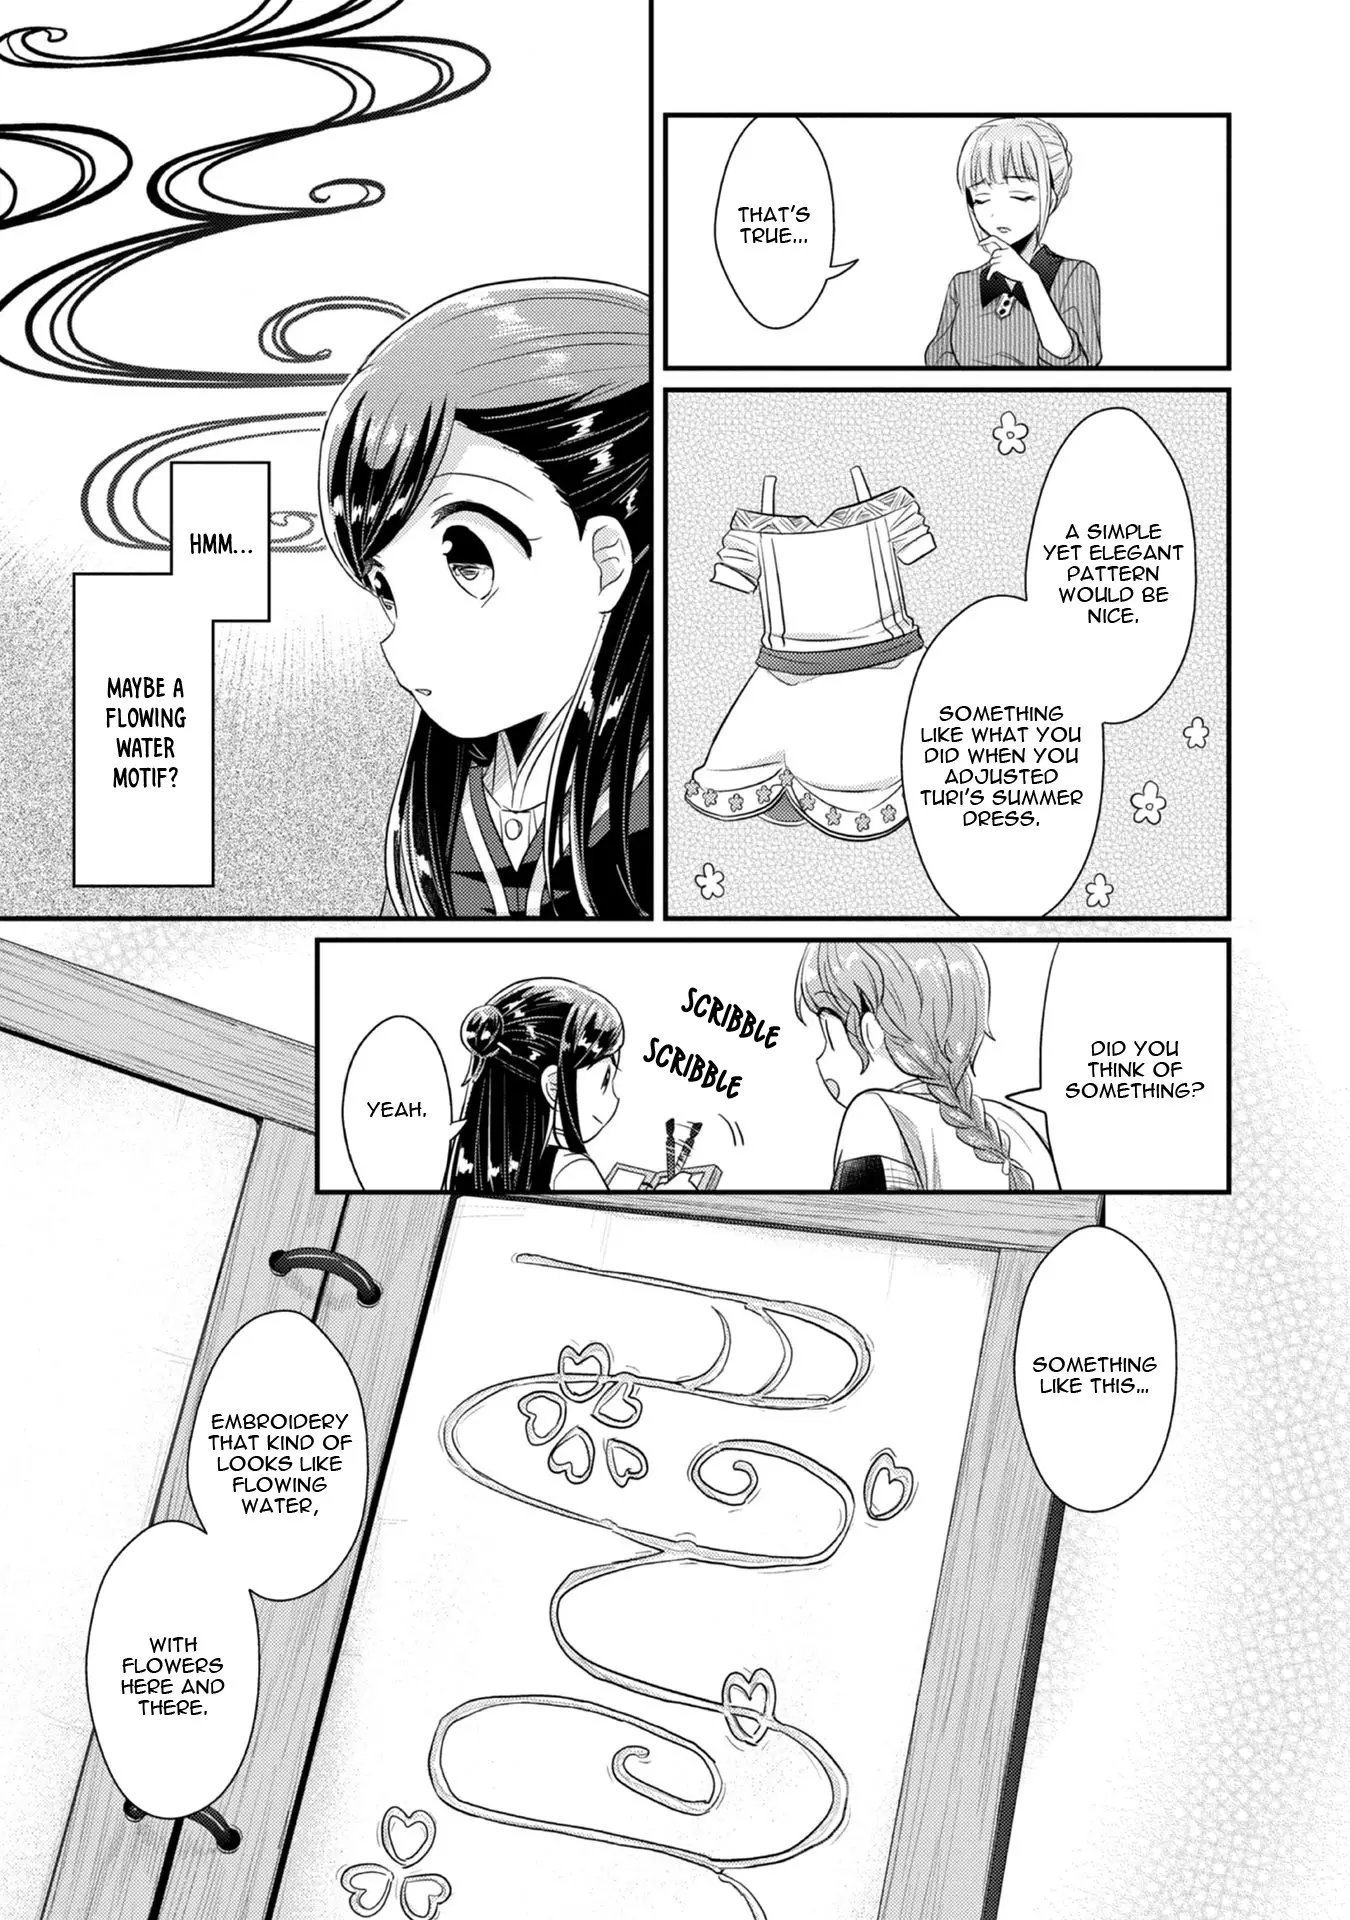 Manga Part 3 Volume 4, Ascendance of a Bookworm Wiki